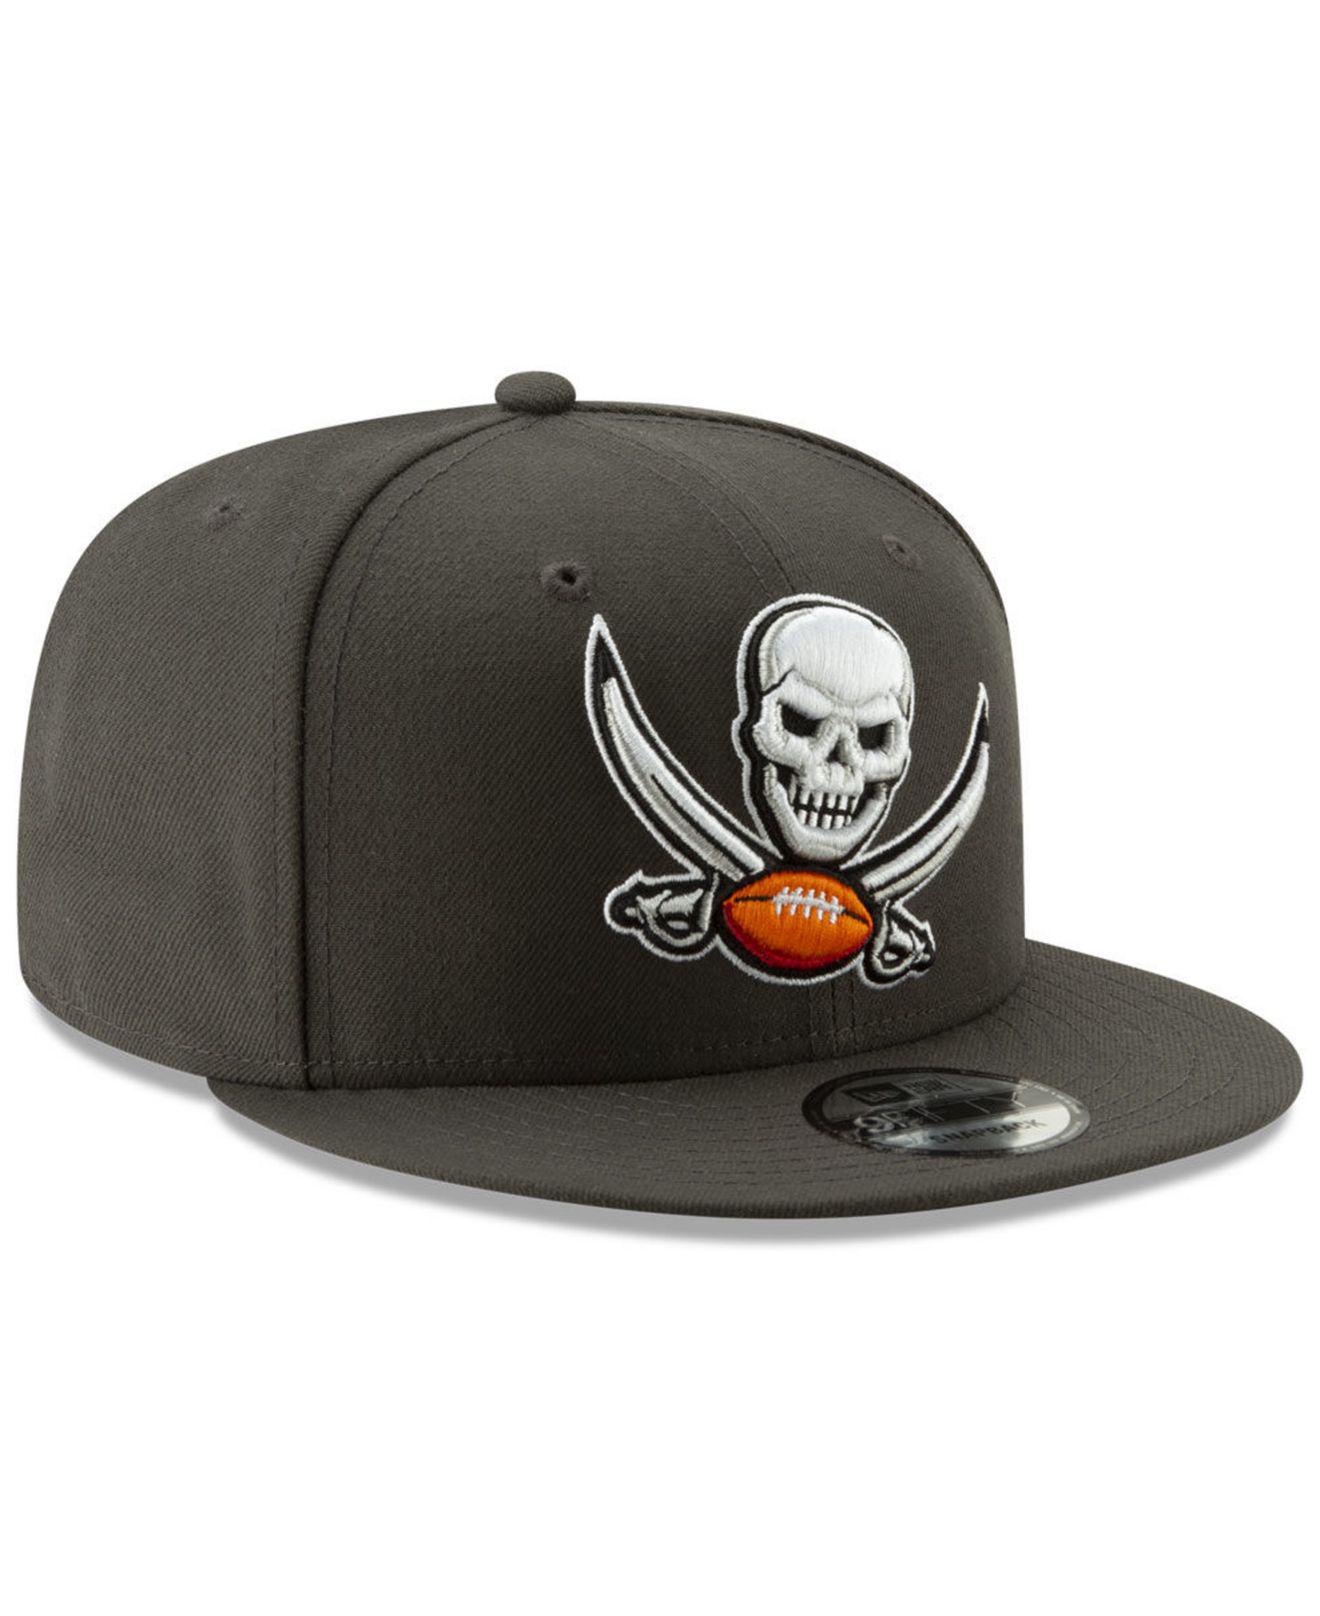 Tampa Bay Buccaneers Sideline 9FIFTY Snapback Hat - Black/ White Ink